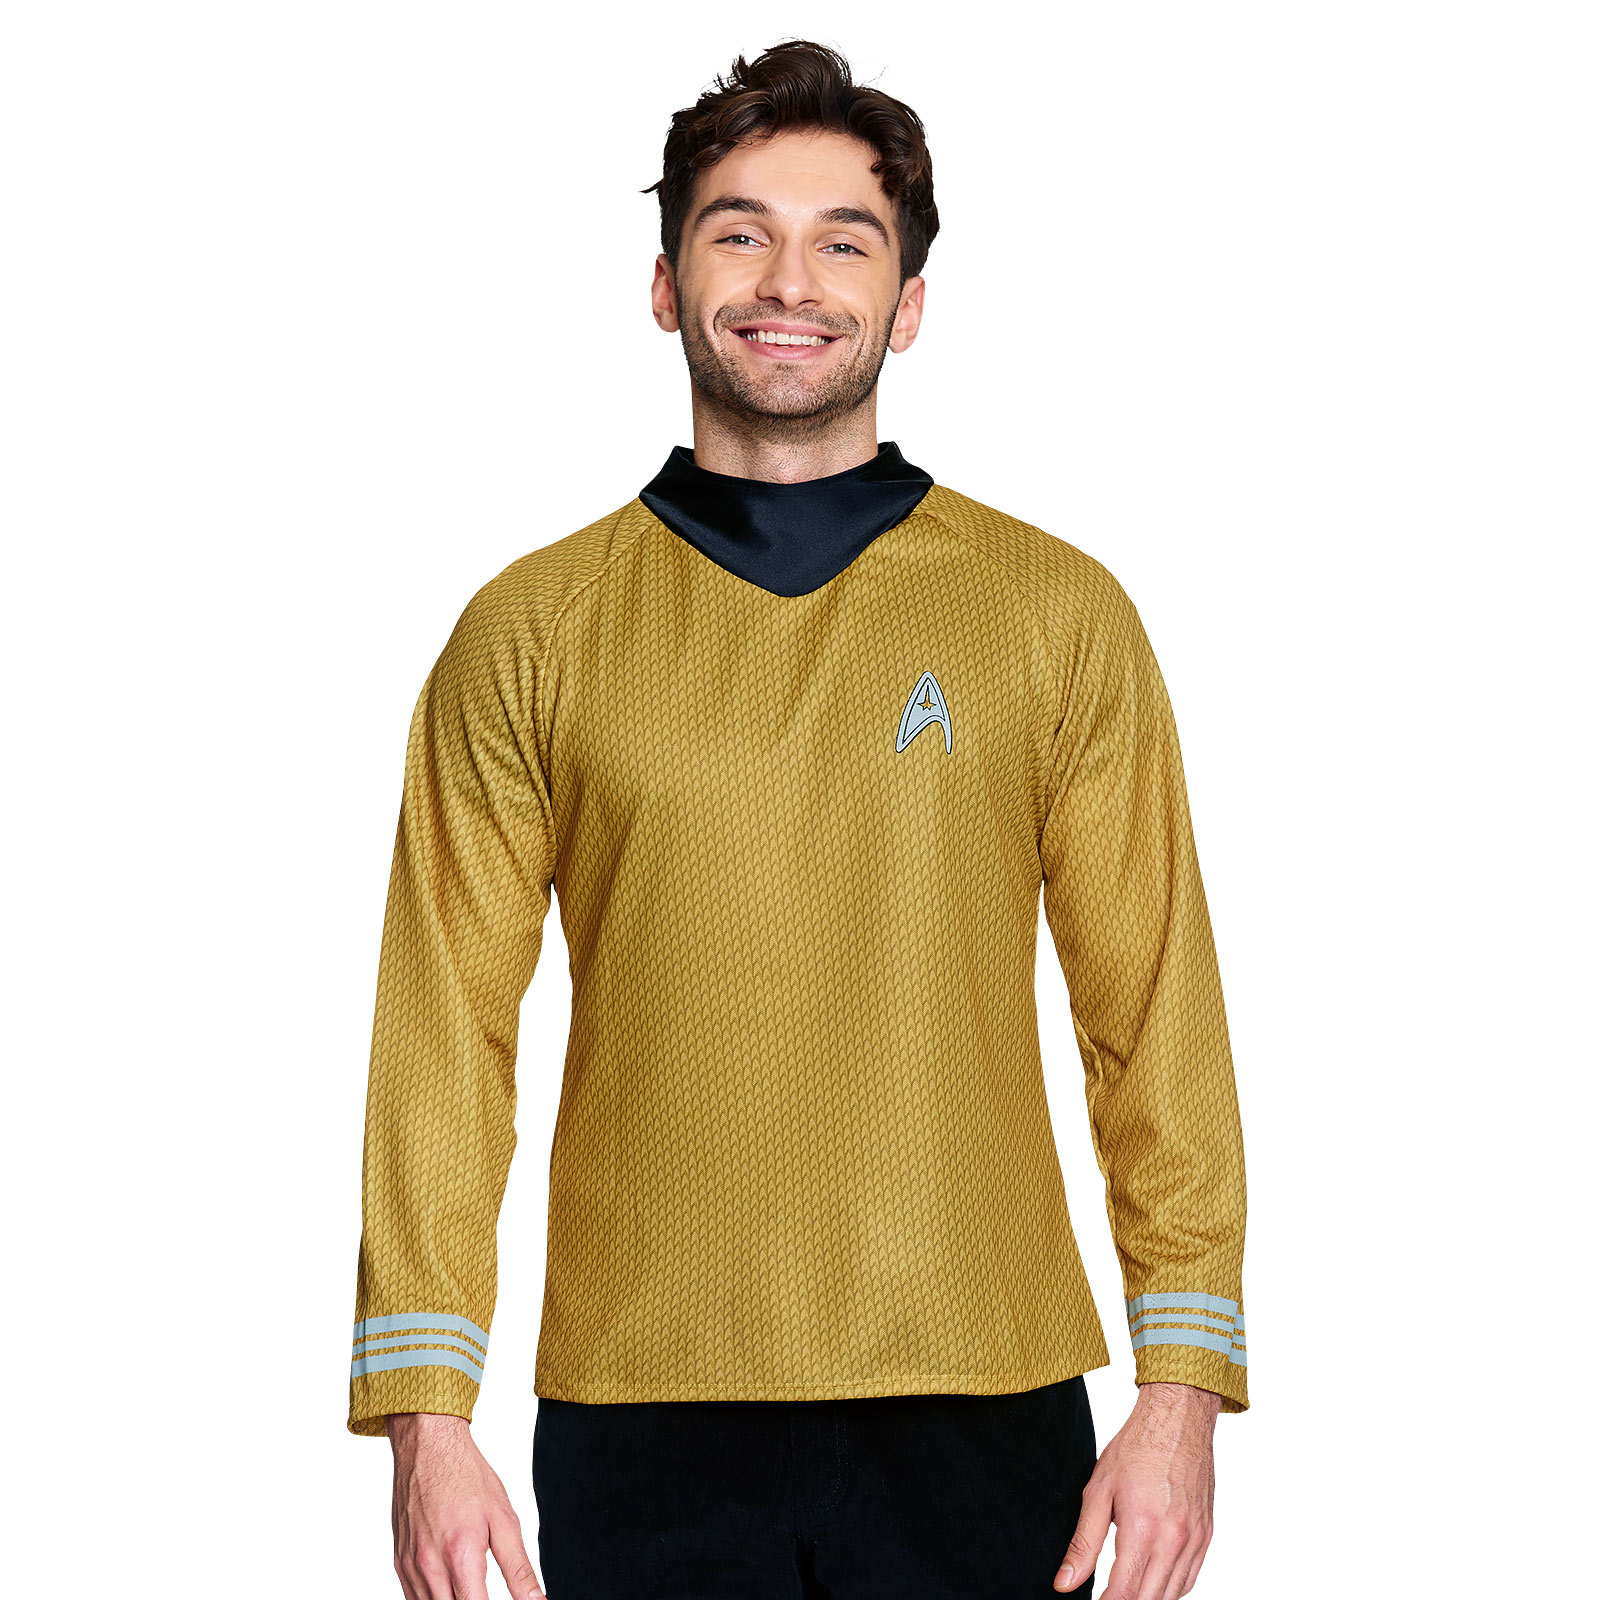 Star Trek - Captain Kirk Movie Costume Shirt